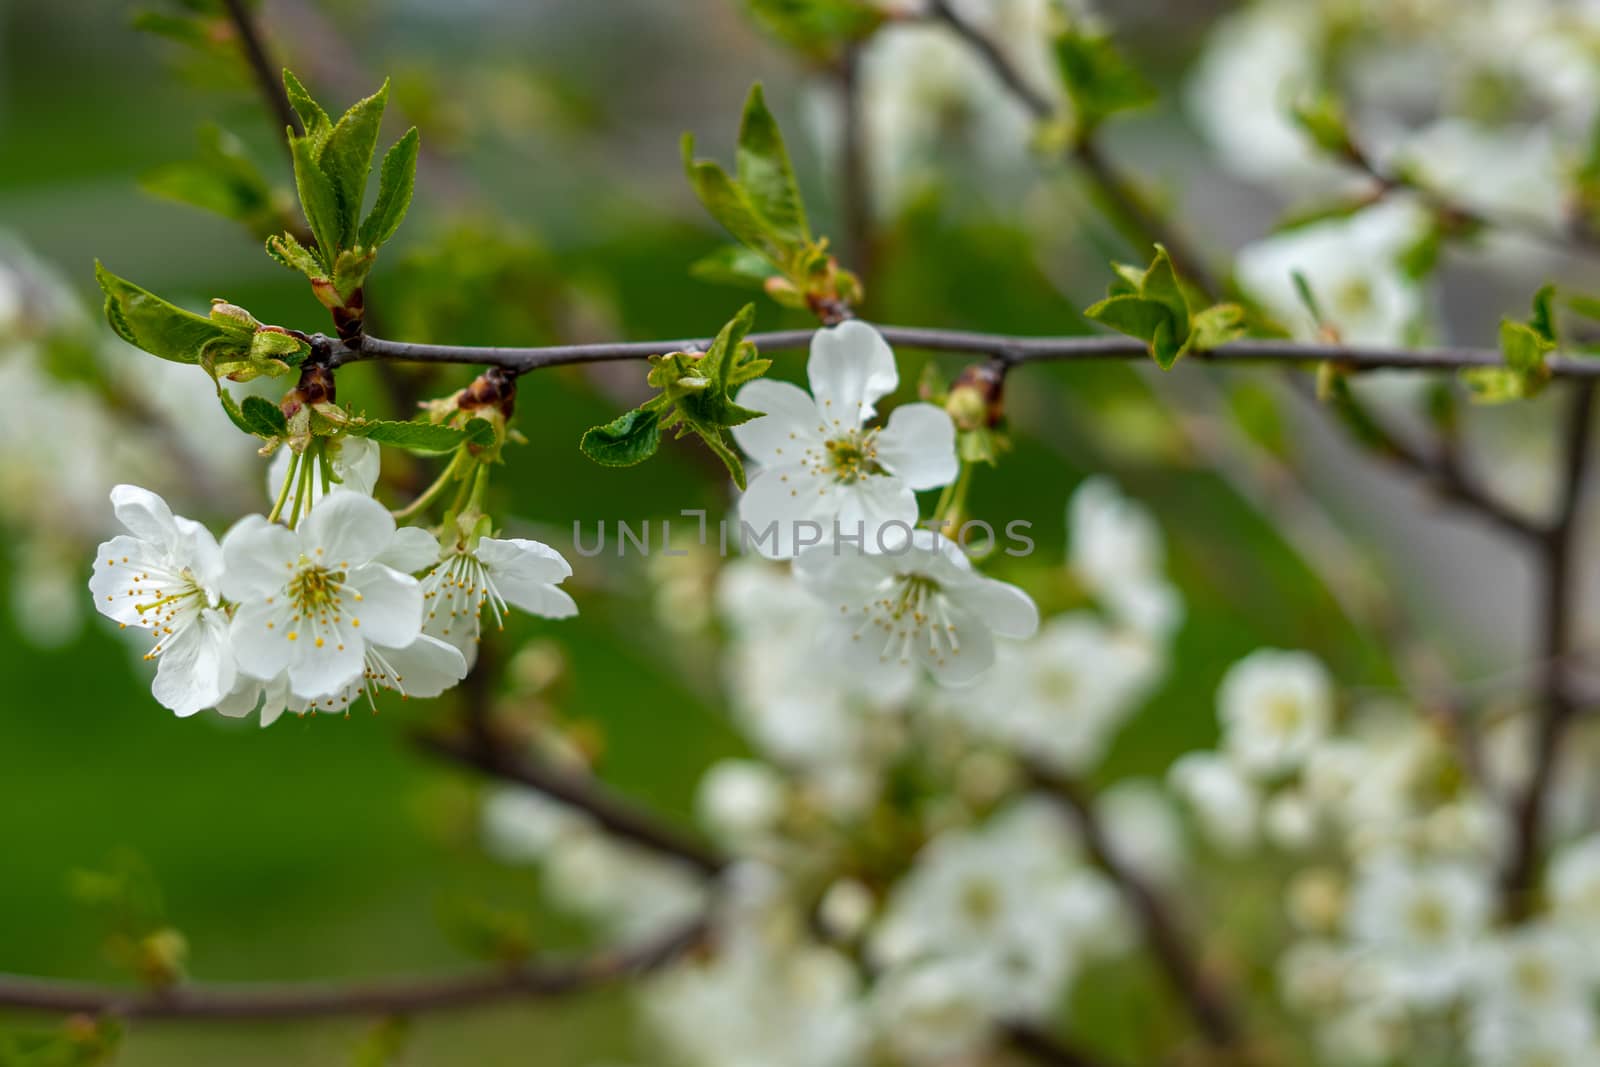 white pear blossom on green background in spring closeup by Serhii_Voroshchuk